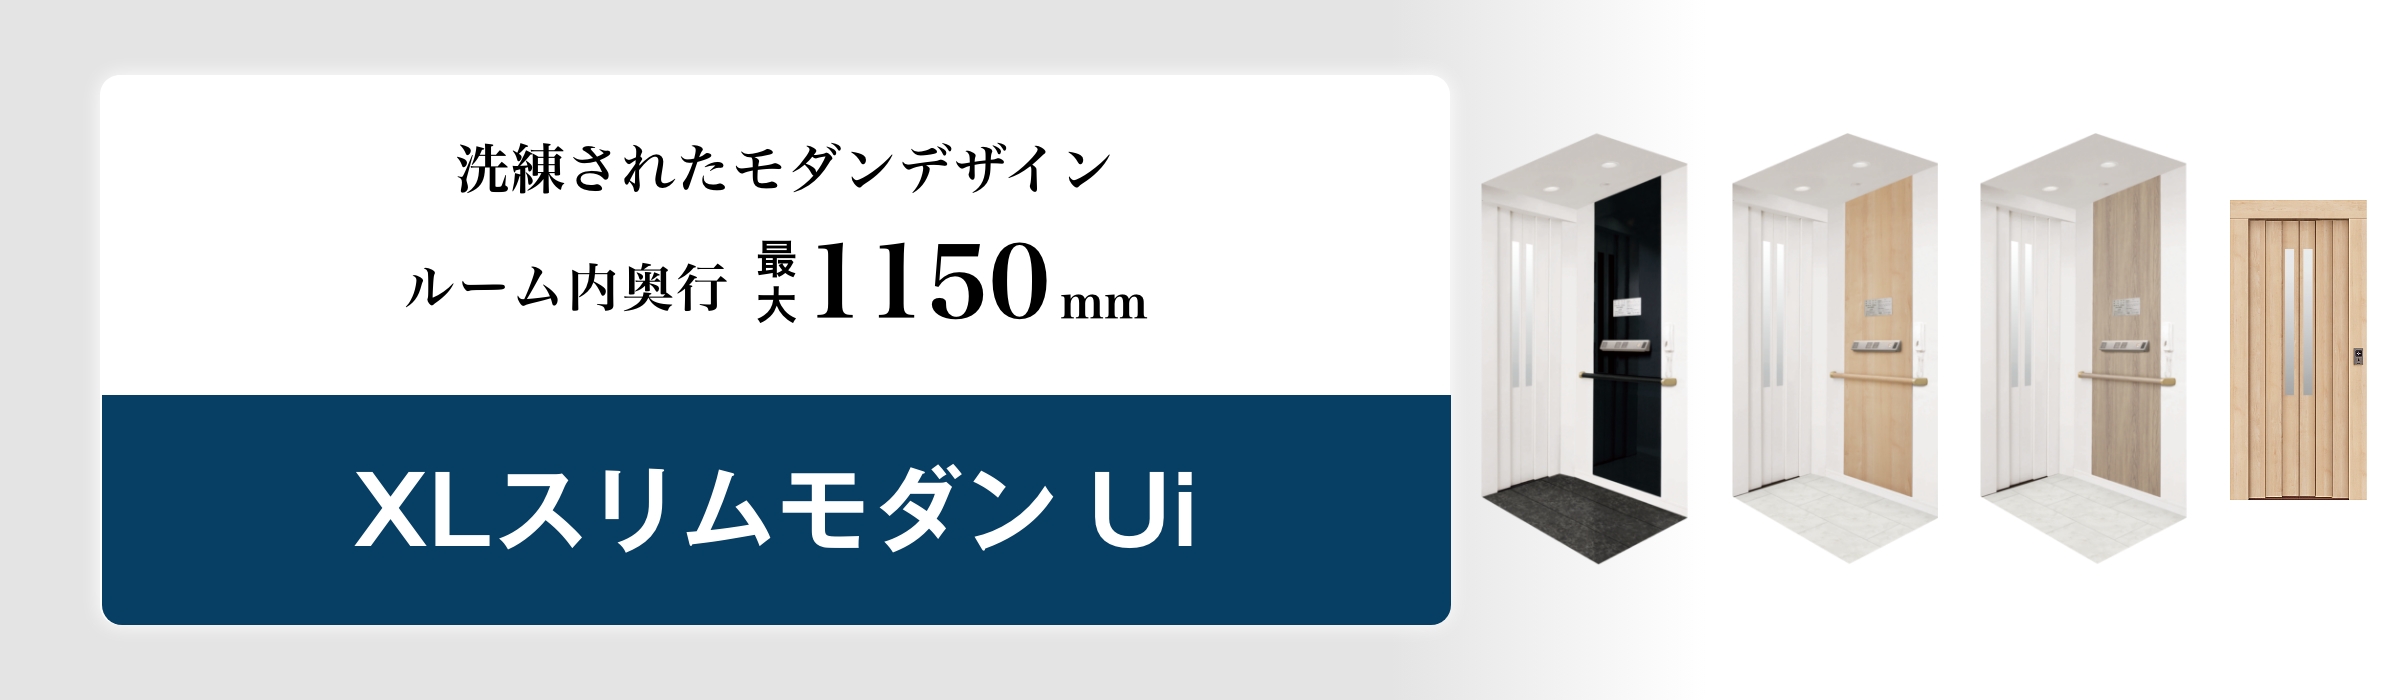 XLスリムモダンUi | 商品ラインナップ | ホームエレベーター | ホーム